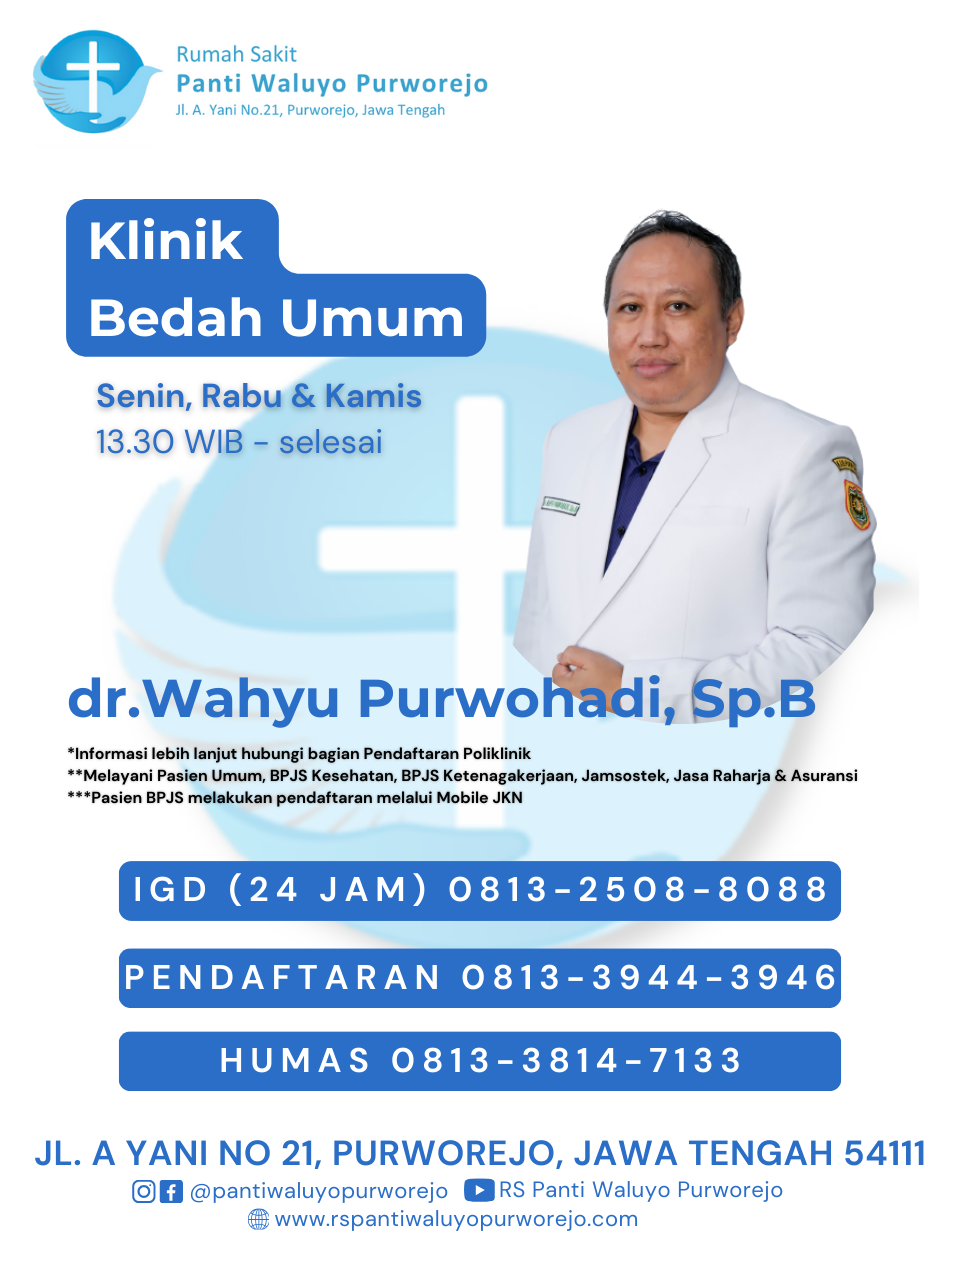 dr. Wahyu Purwohadi, Sp.B